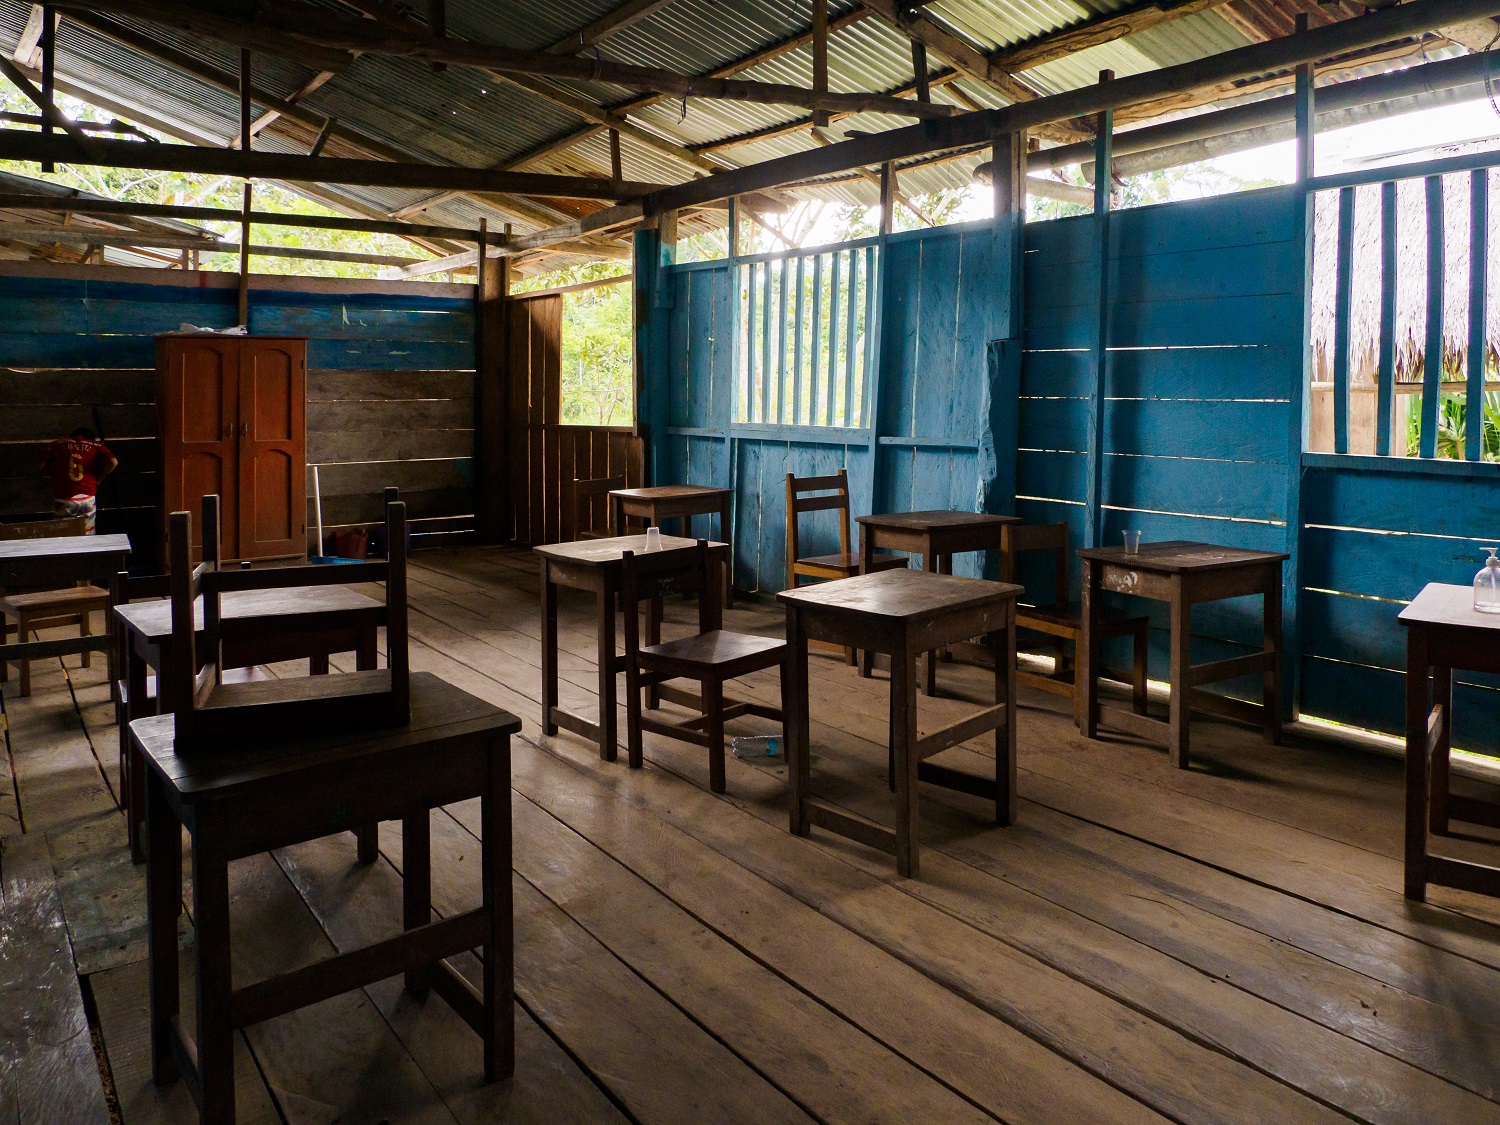 Photograph of a school classroom in Latin America